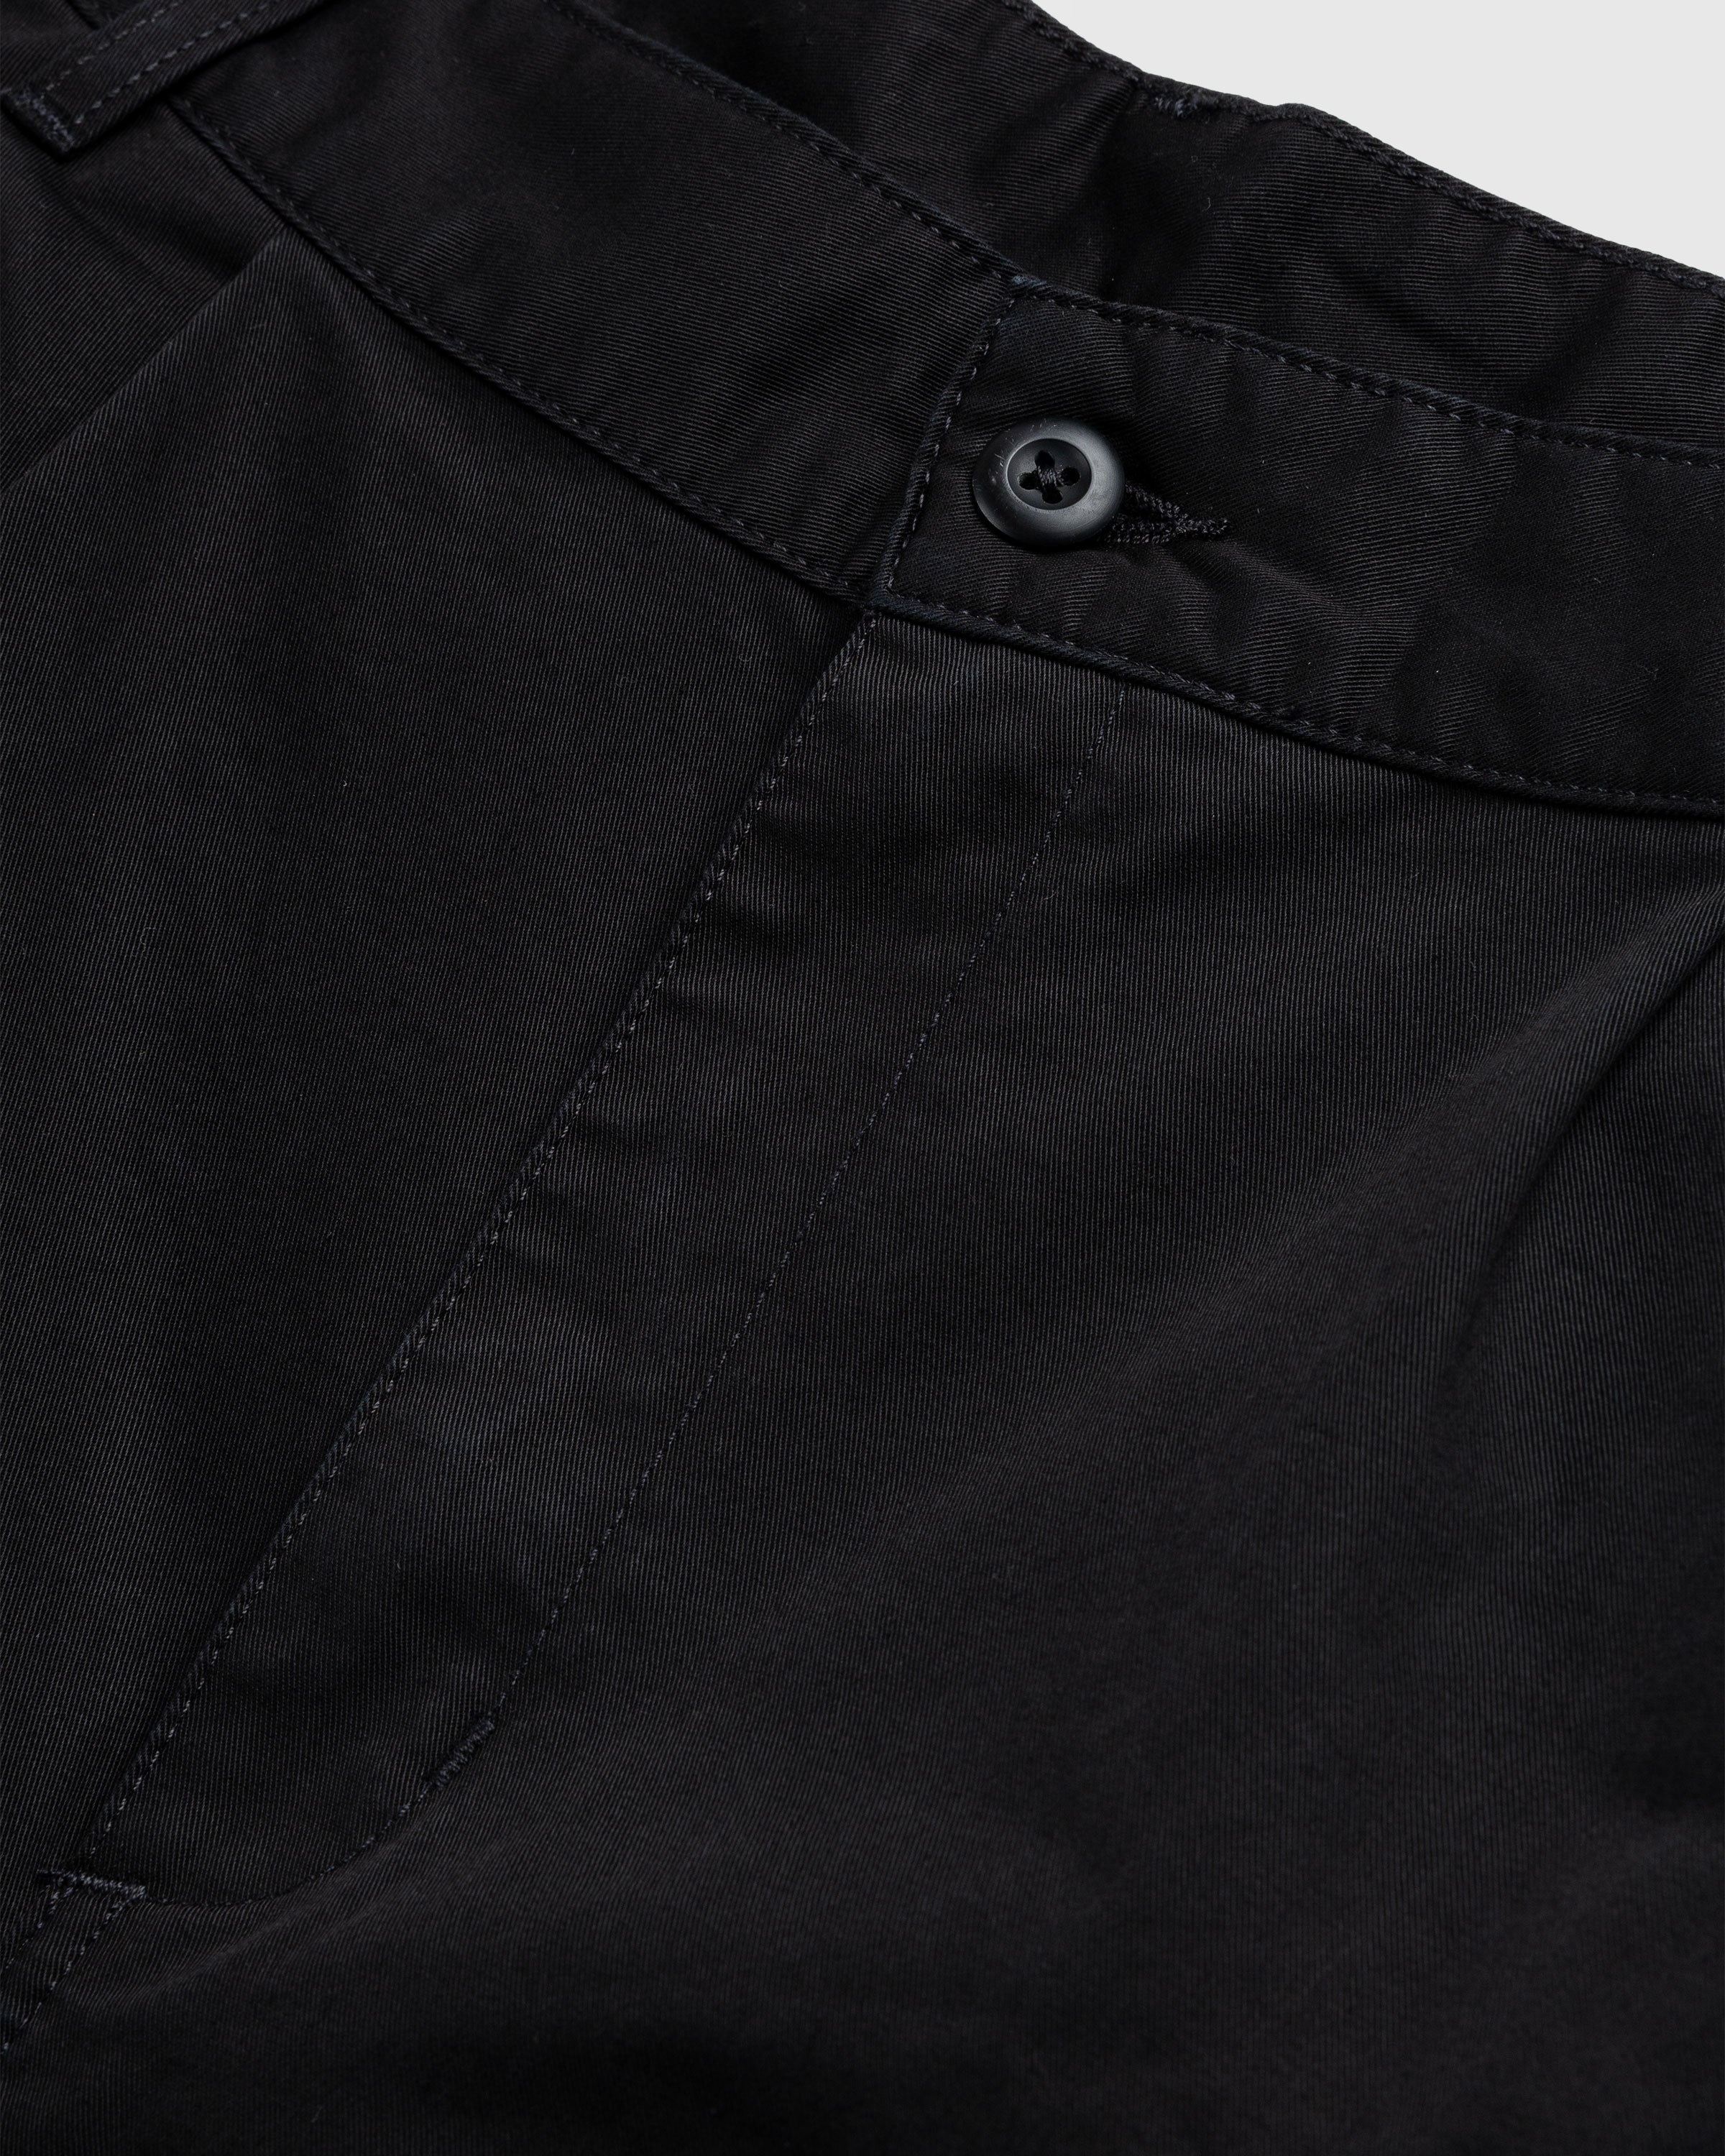 Carhartt WIP – Colston Pant Stonewashed Black - Pants - Black - Image 5